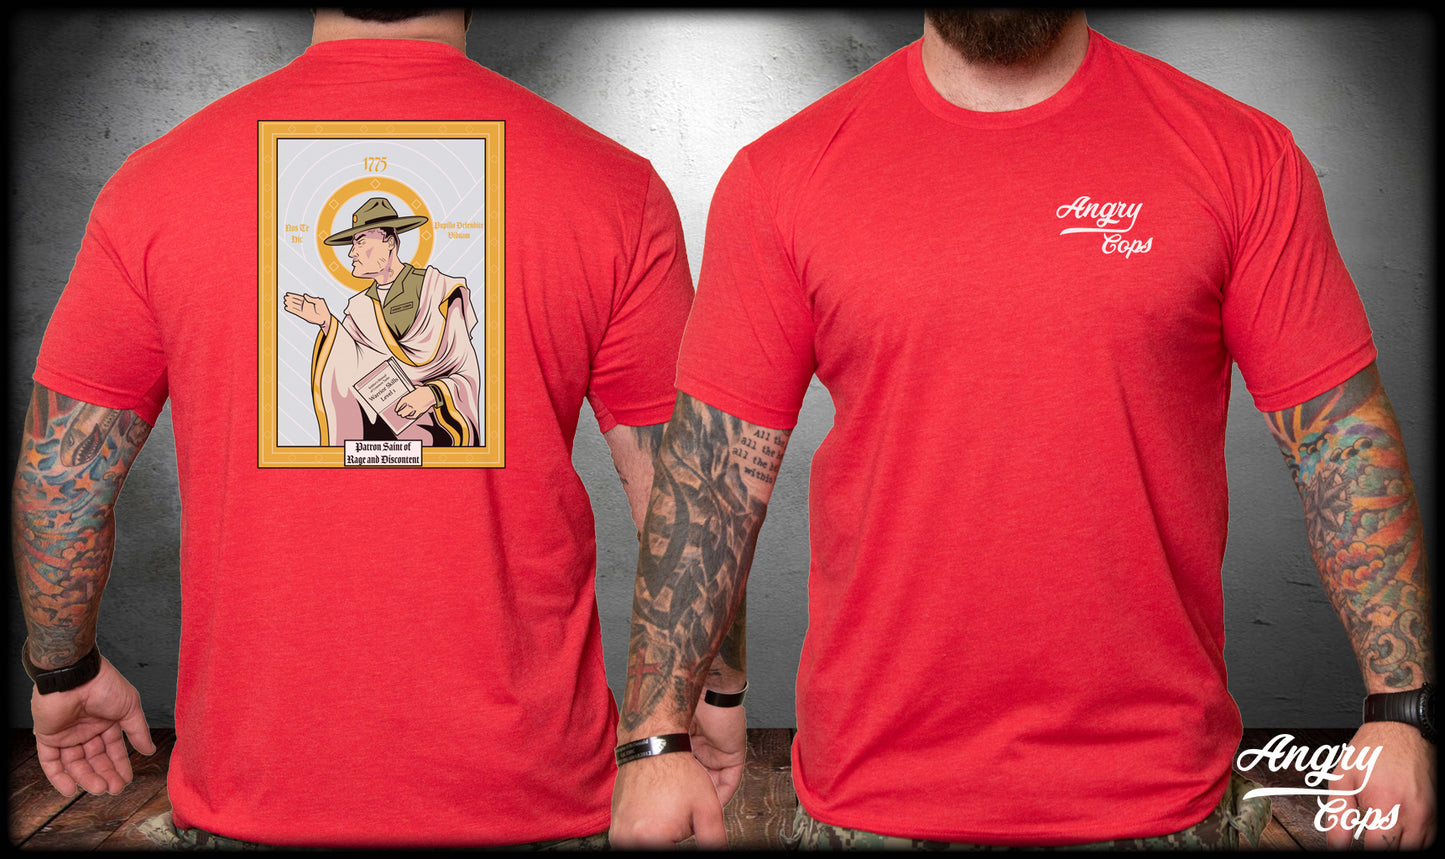 Patron Saint of Rage Gallery Shirt